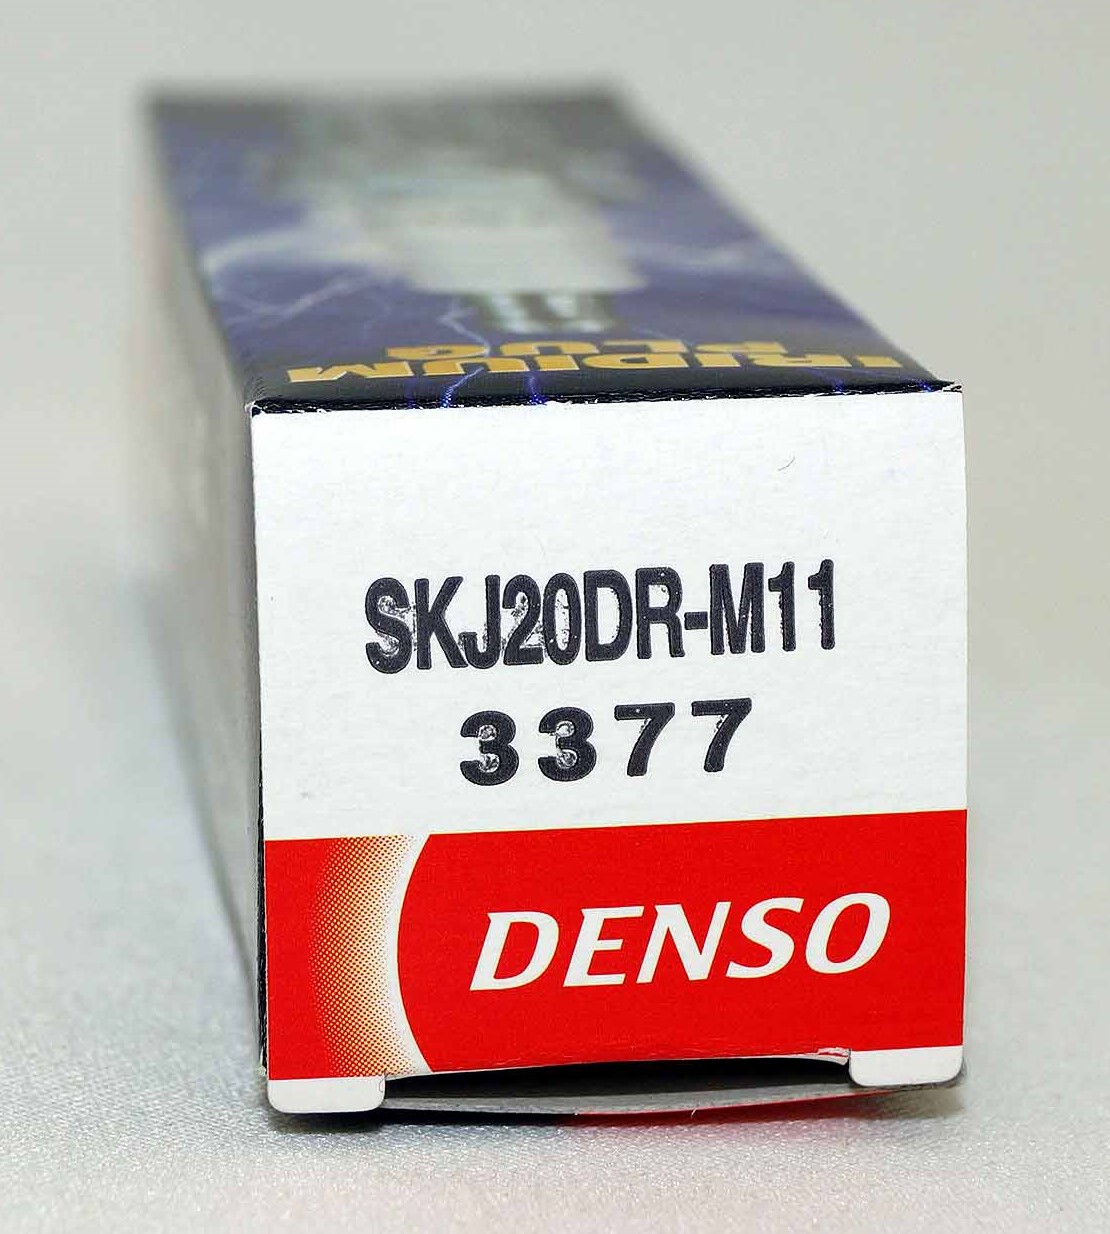 Set of 6 Genuine Denso 3377 SKJ20DR-M11 Iridium Long Life Spark Plug - image 3